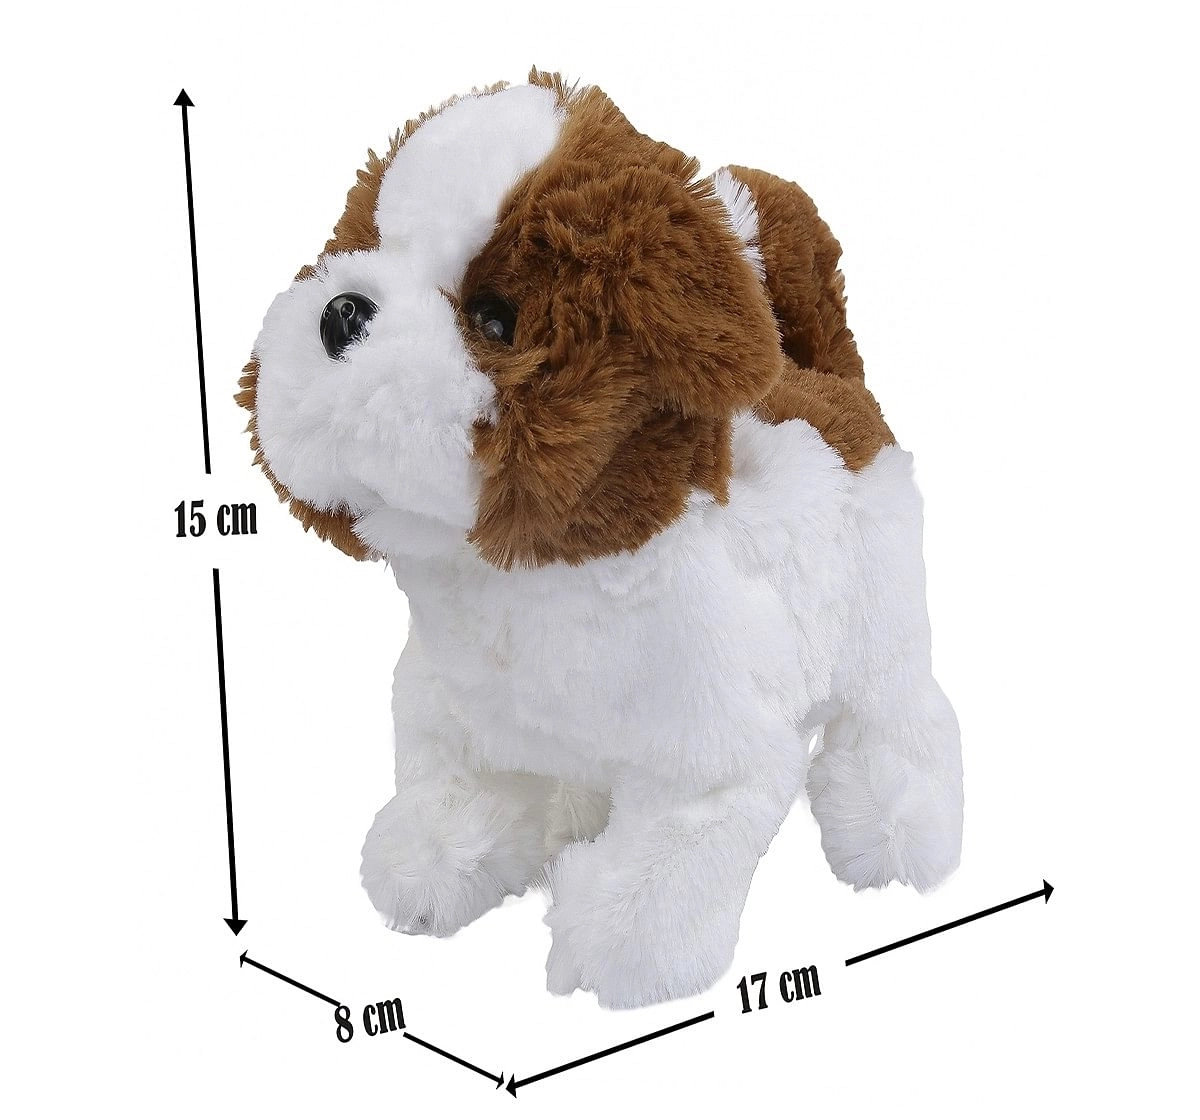 Hamleys Movers & Shakers Baby Saint Bernard Plush Soft Dog (White & Brown), 3Y+